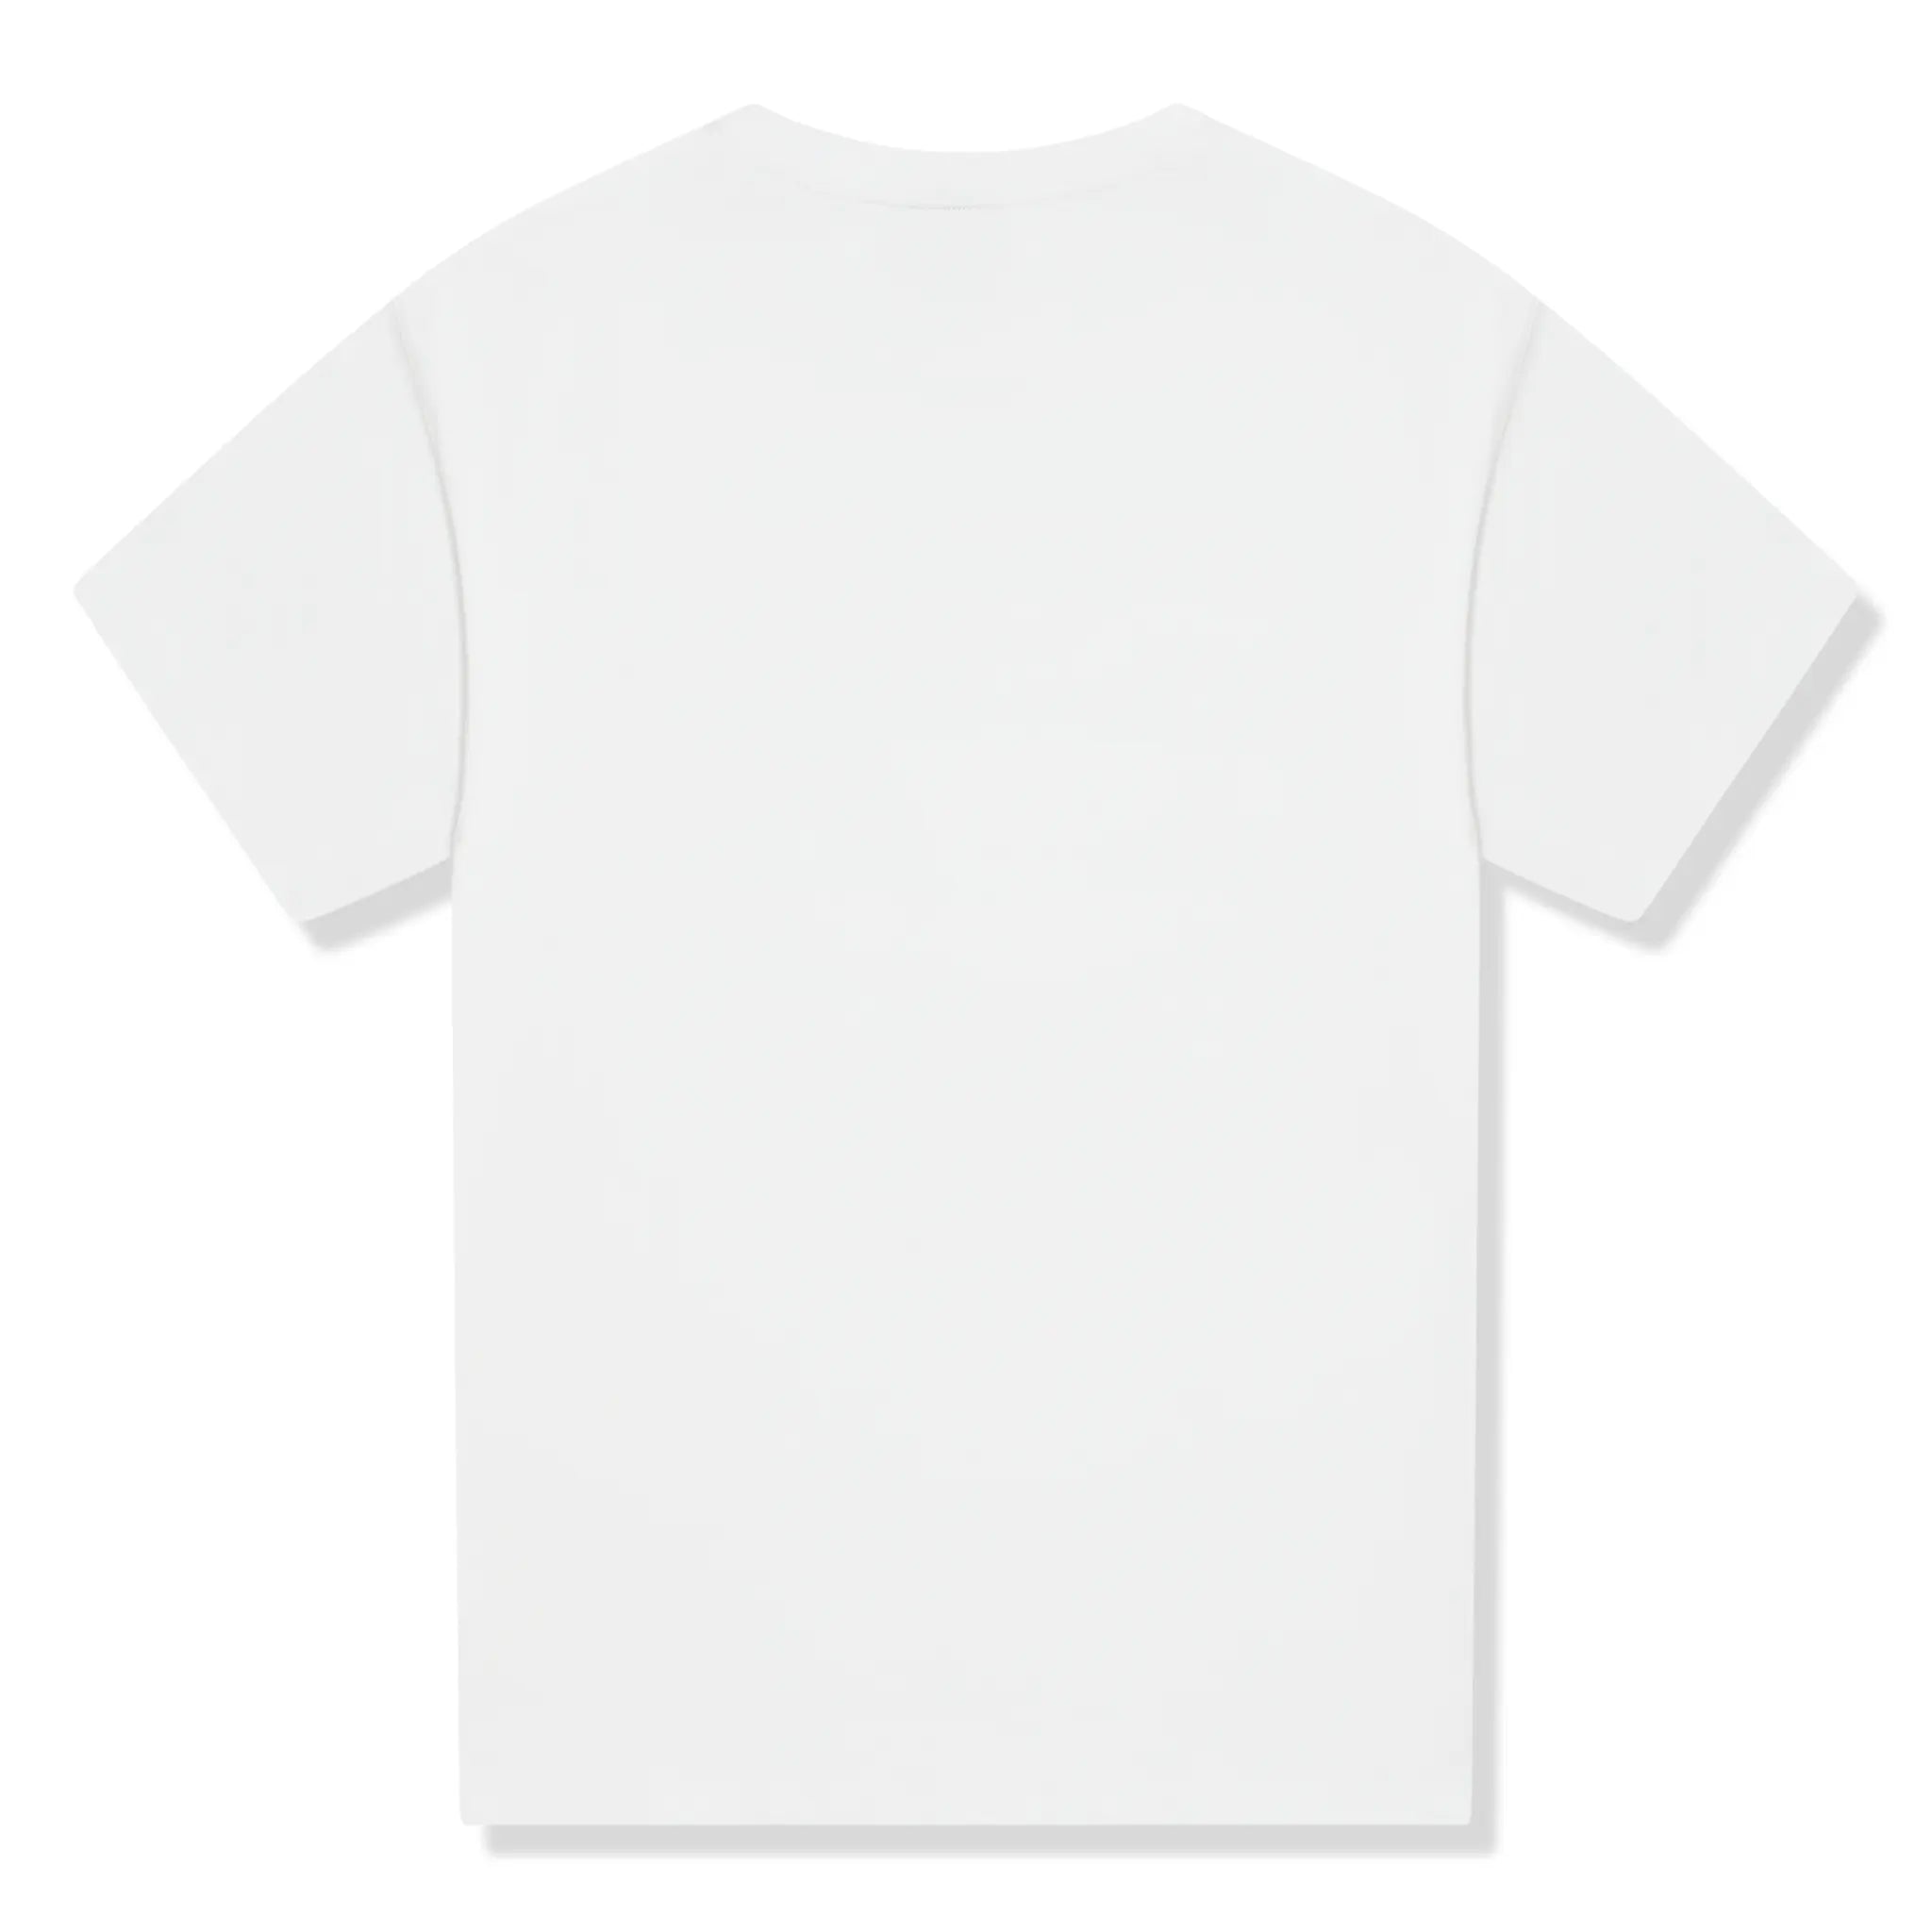 Back view of Carsicko Carrari White T Shirt